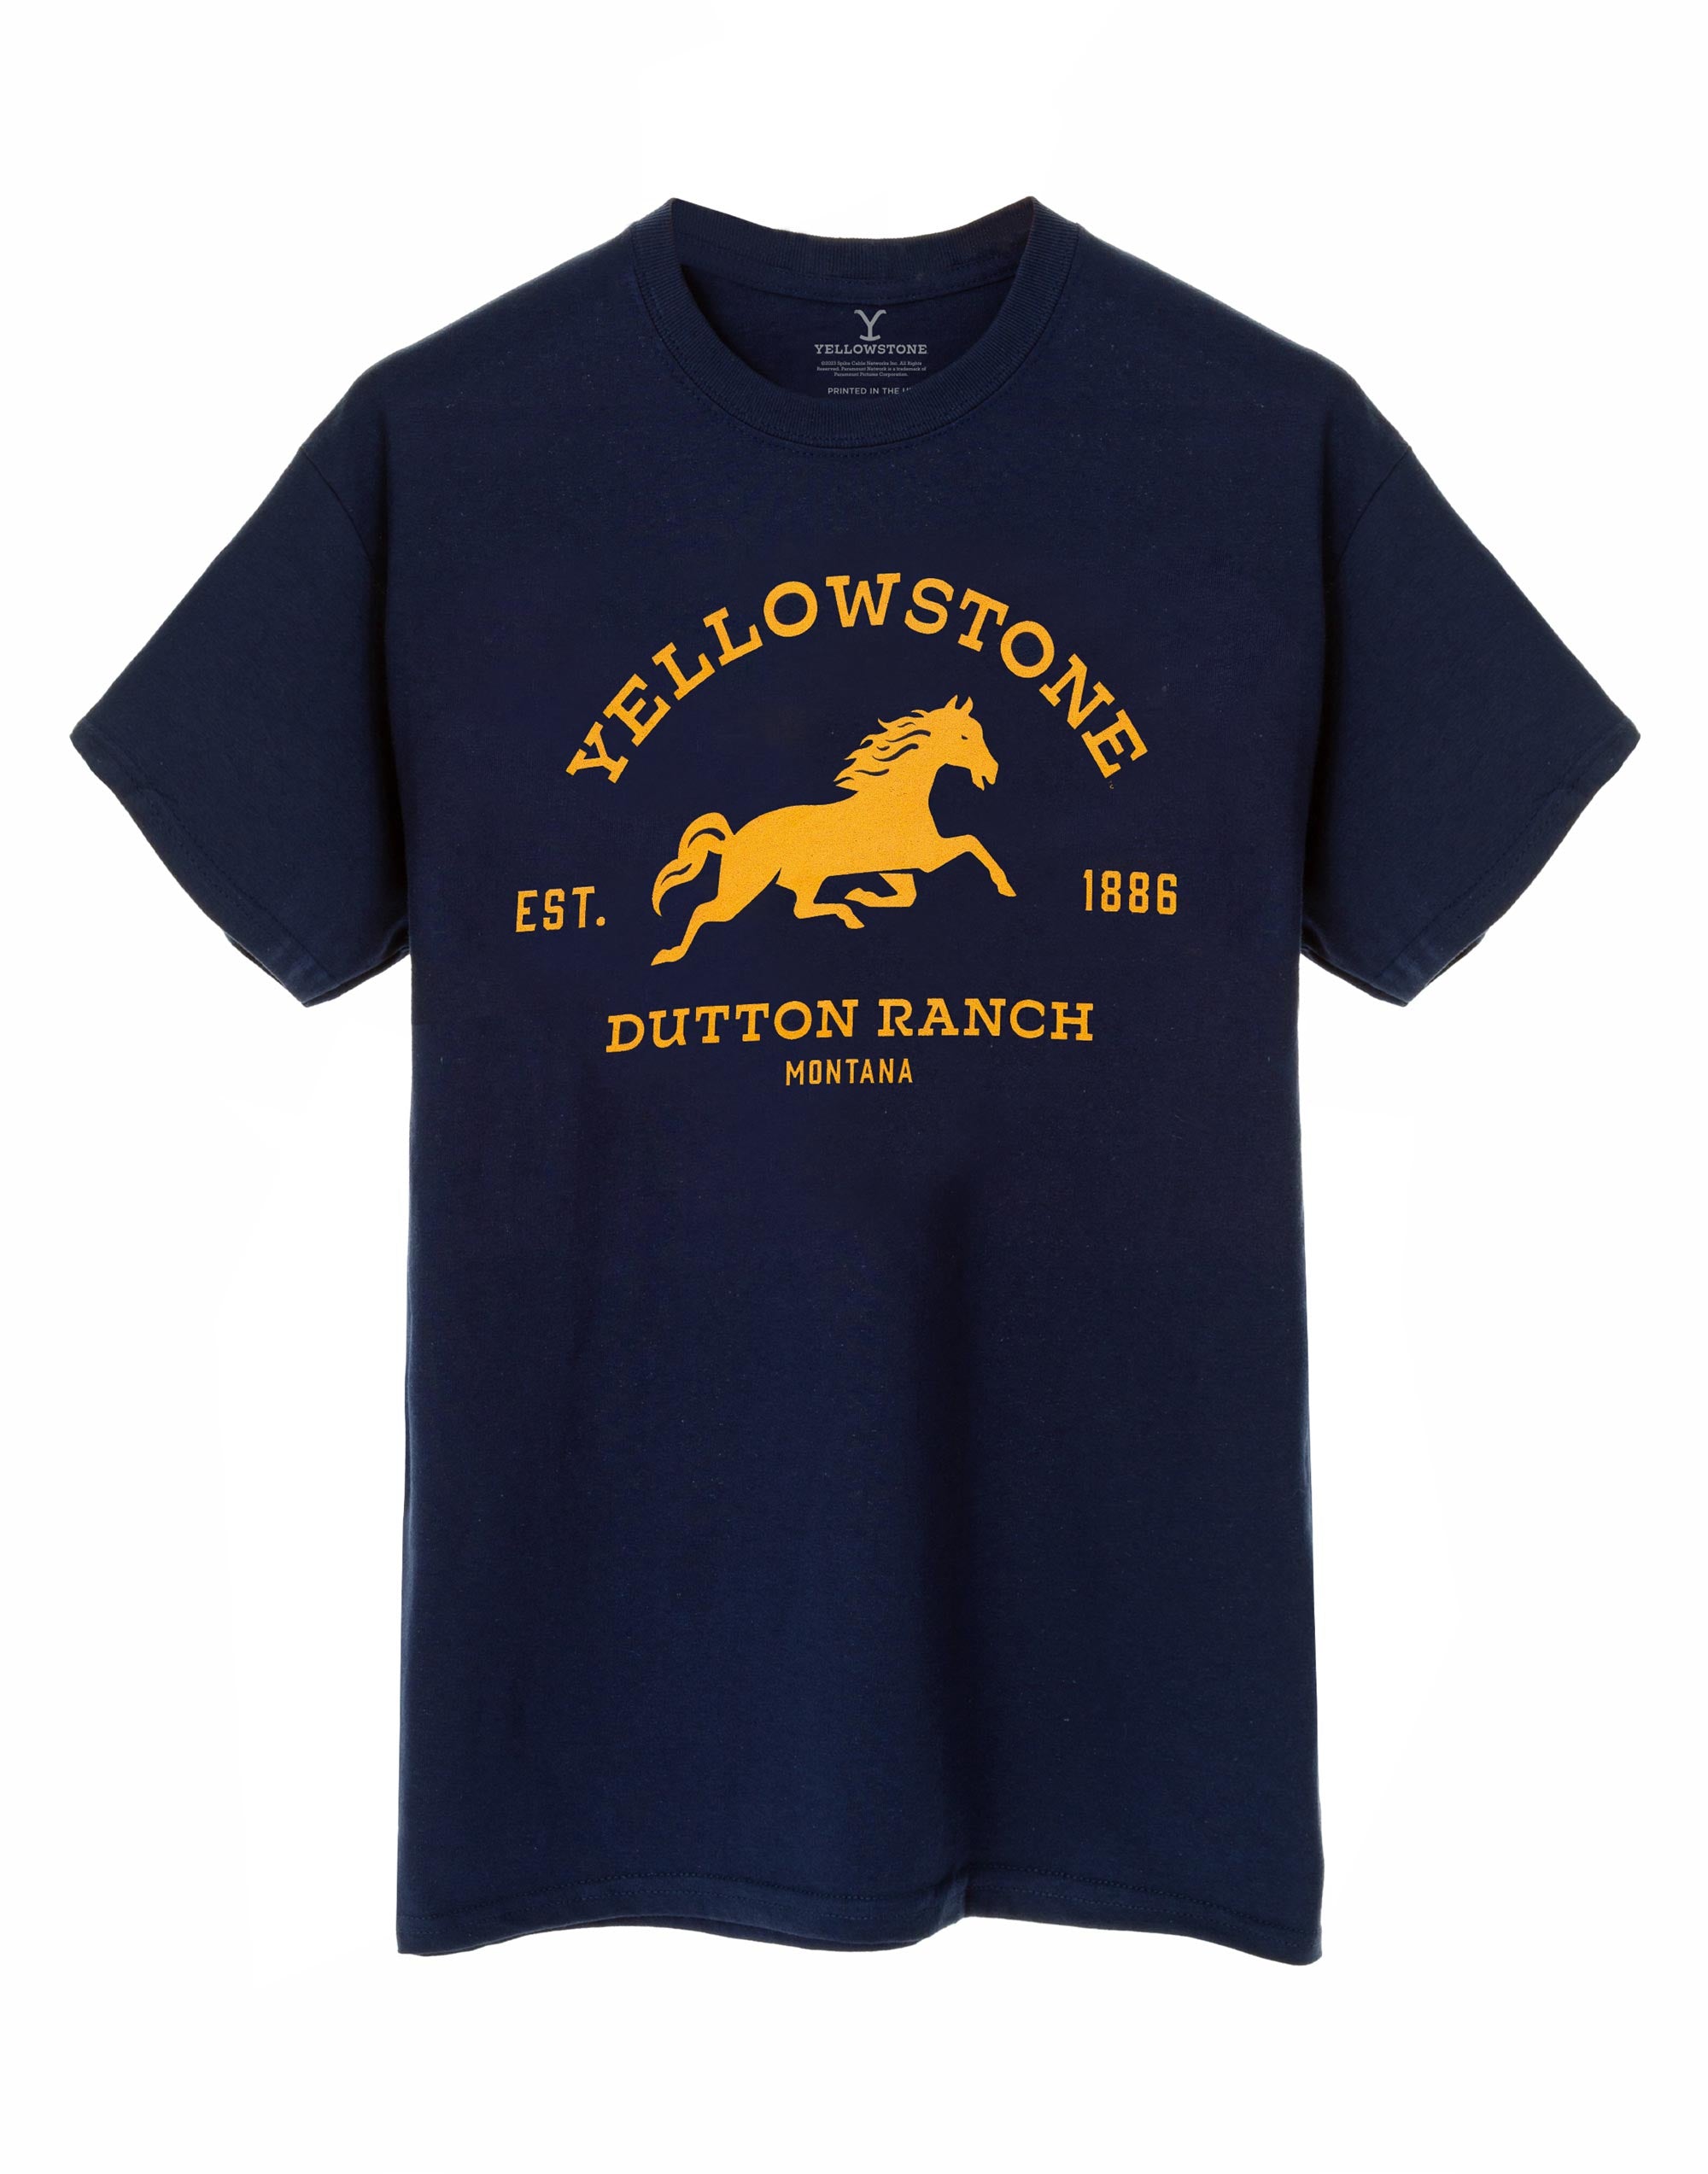 Yellowstone Dutton Ranch Mens T-Shirt